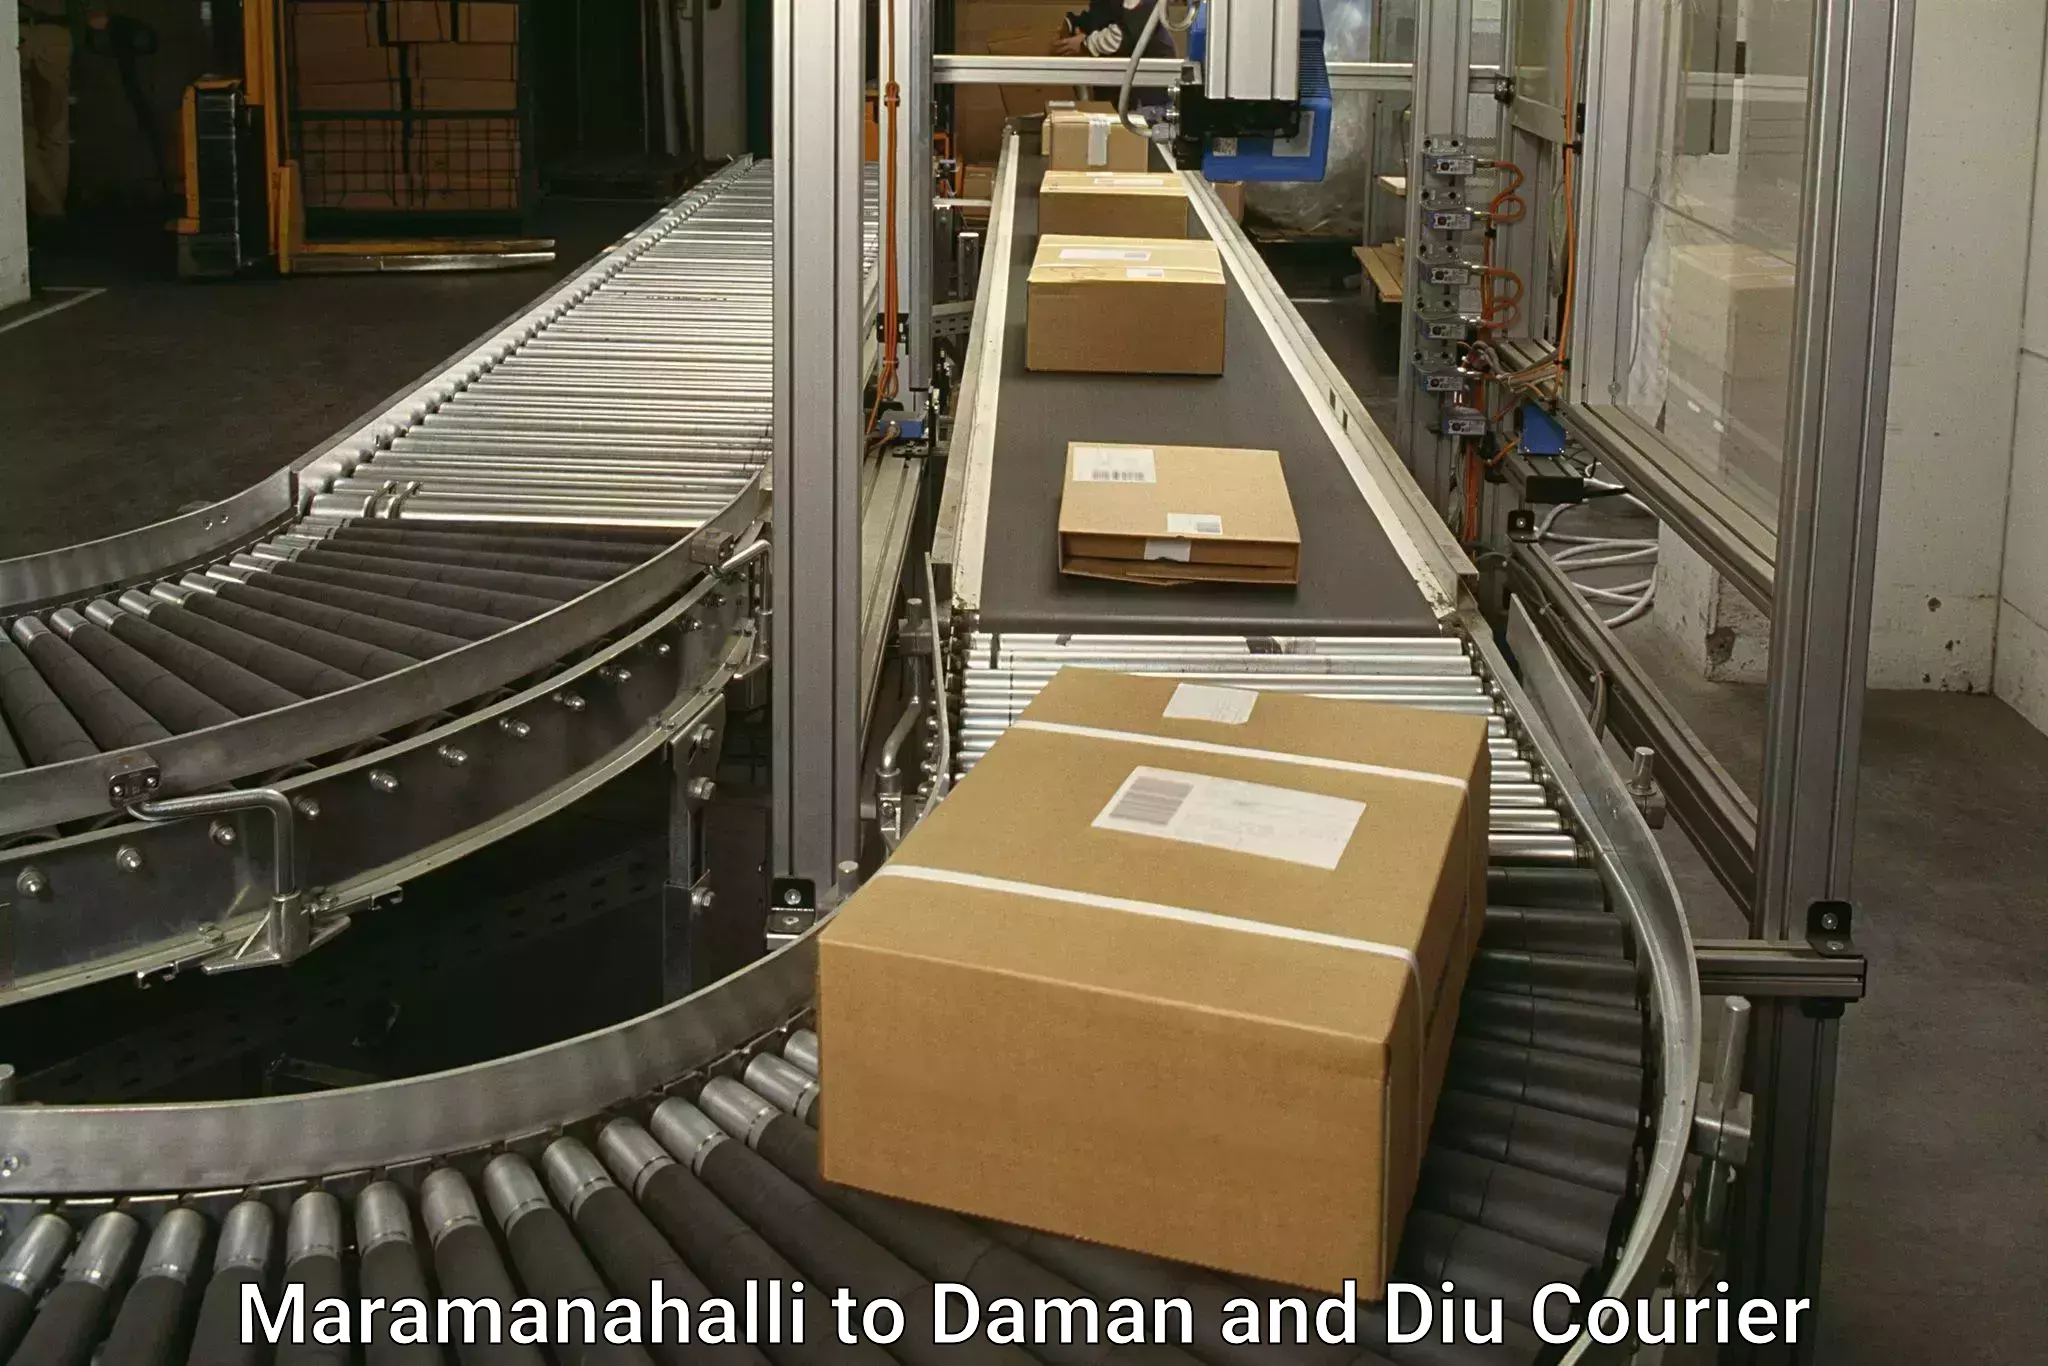 High-speed parcel service Maramanahalli to Daman and Diu